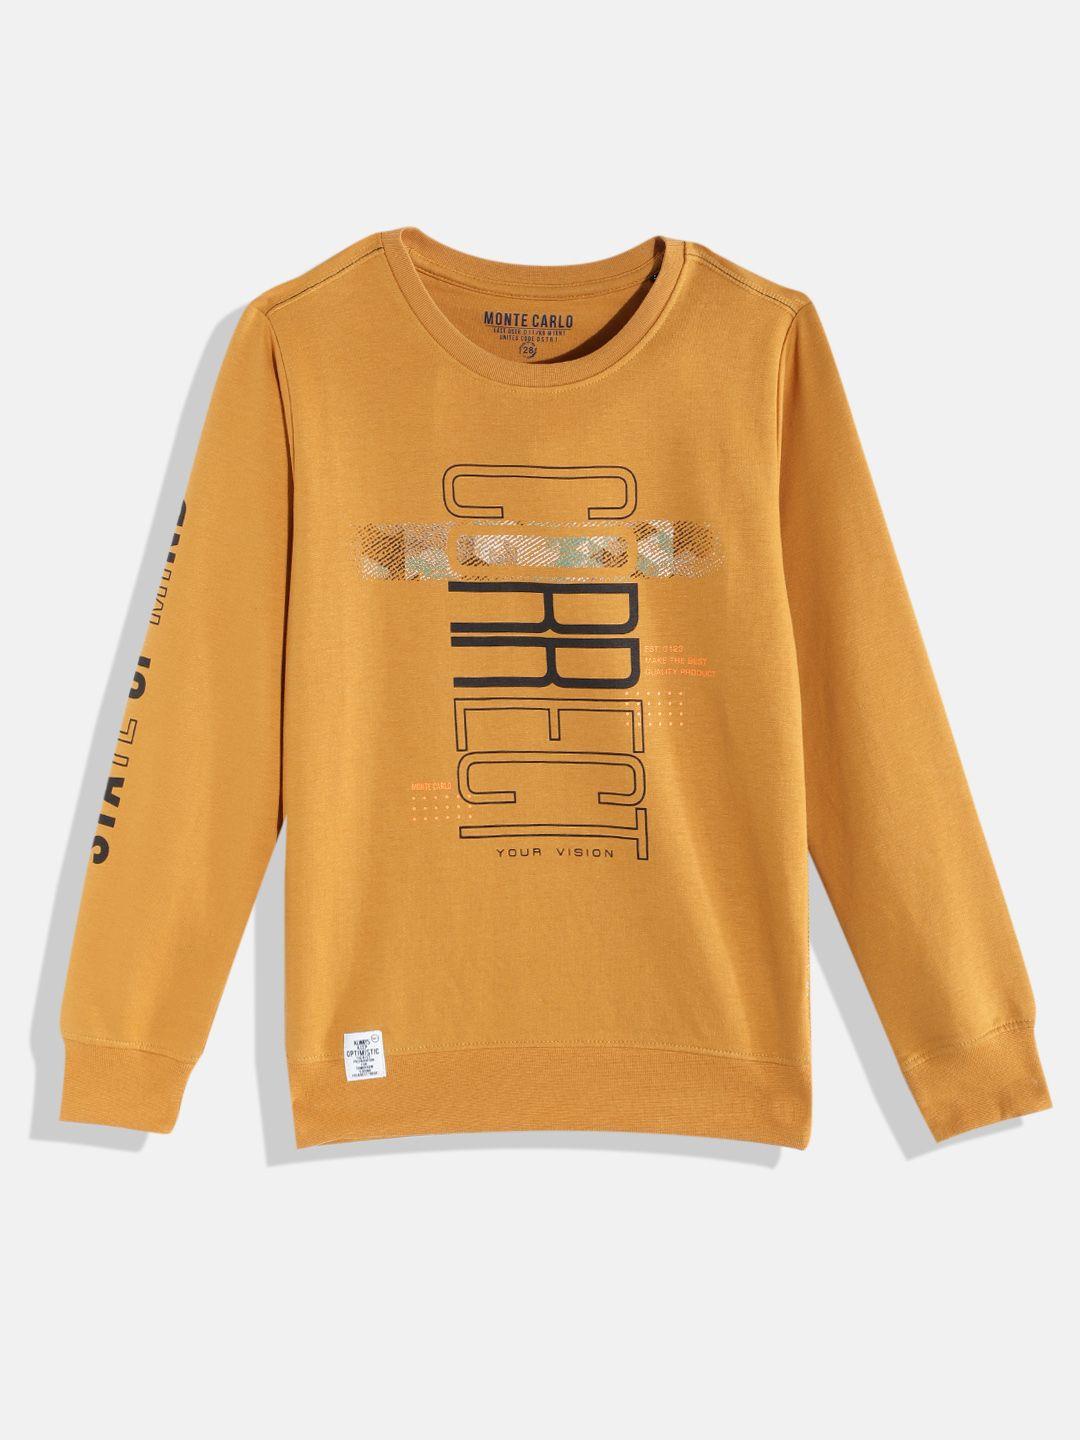 monte carlo boys mustard yellow & black typography printed sweatshirt